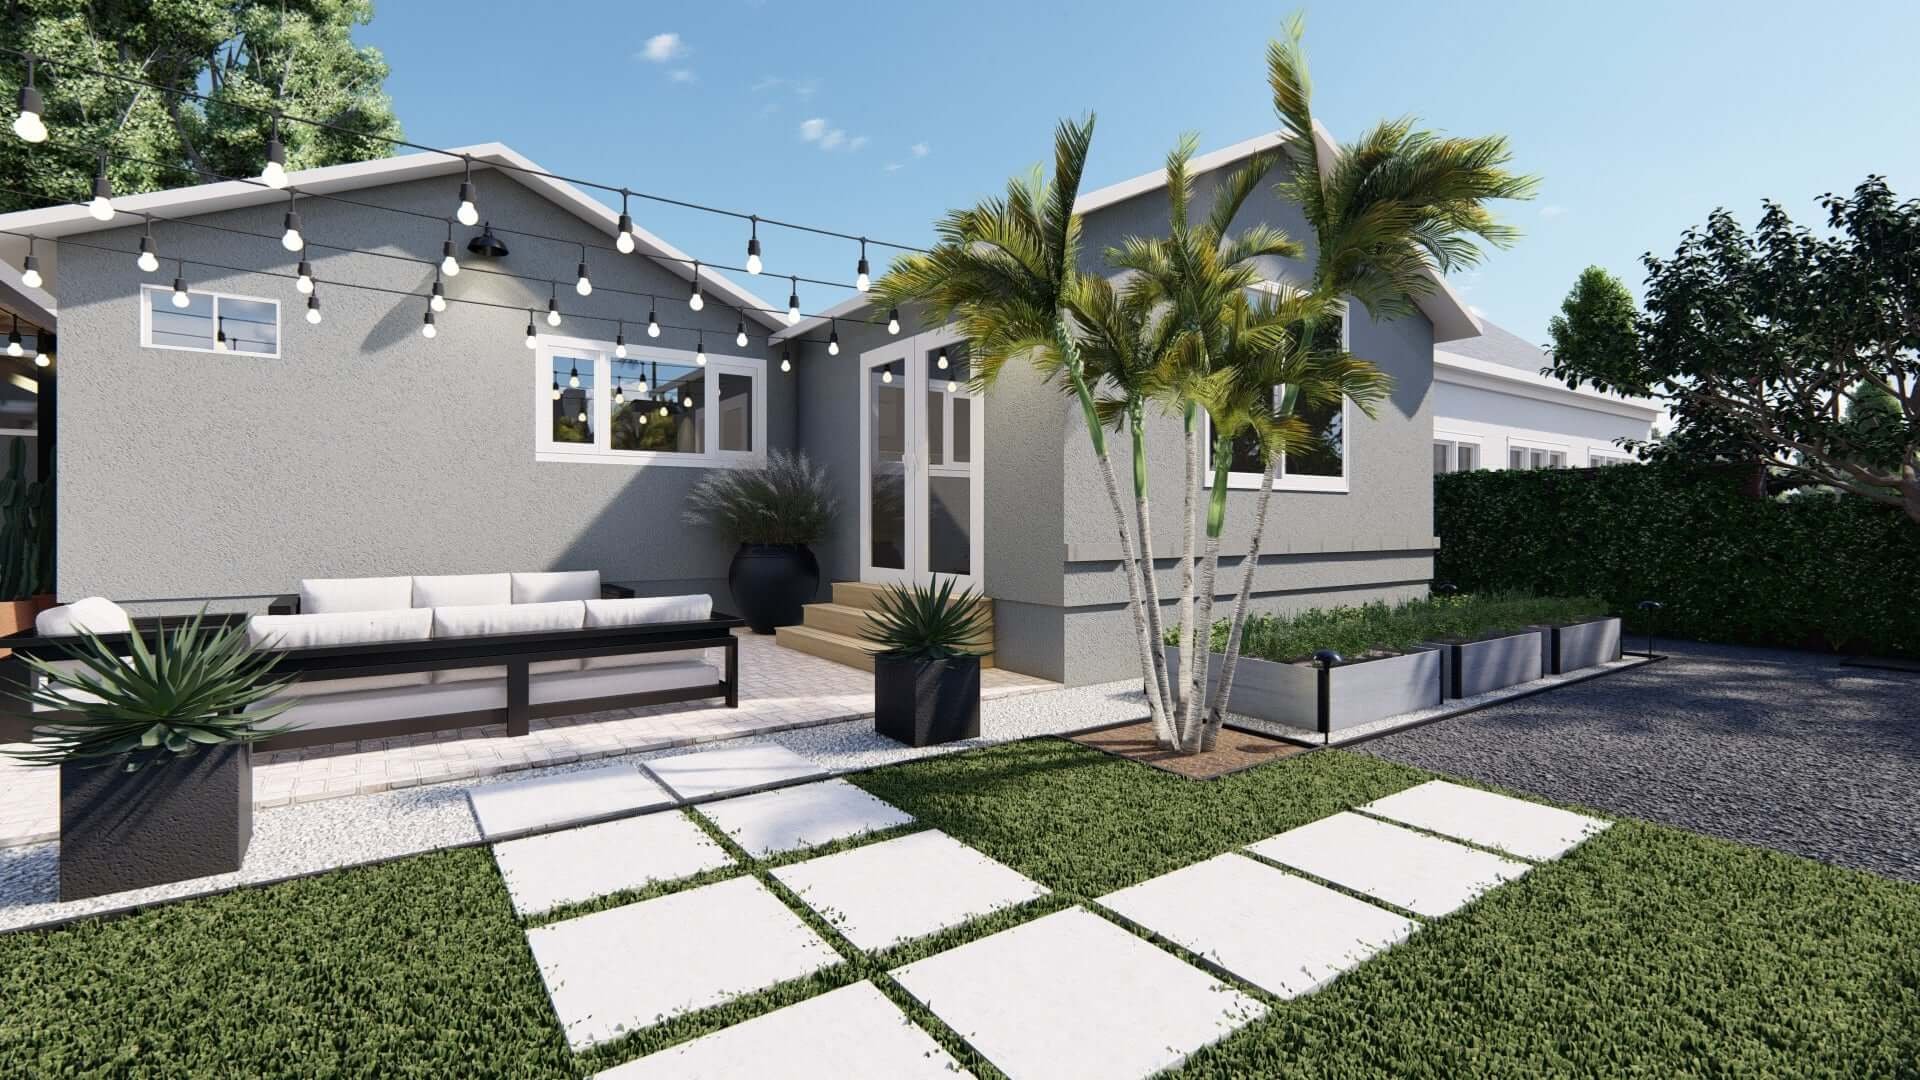 Prefab maple 4’ x 4’ resin raised garden beds in Los Angeles California backyard landscape design